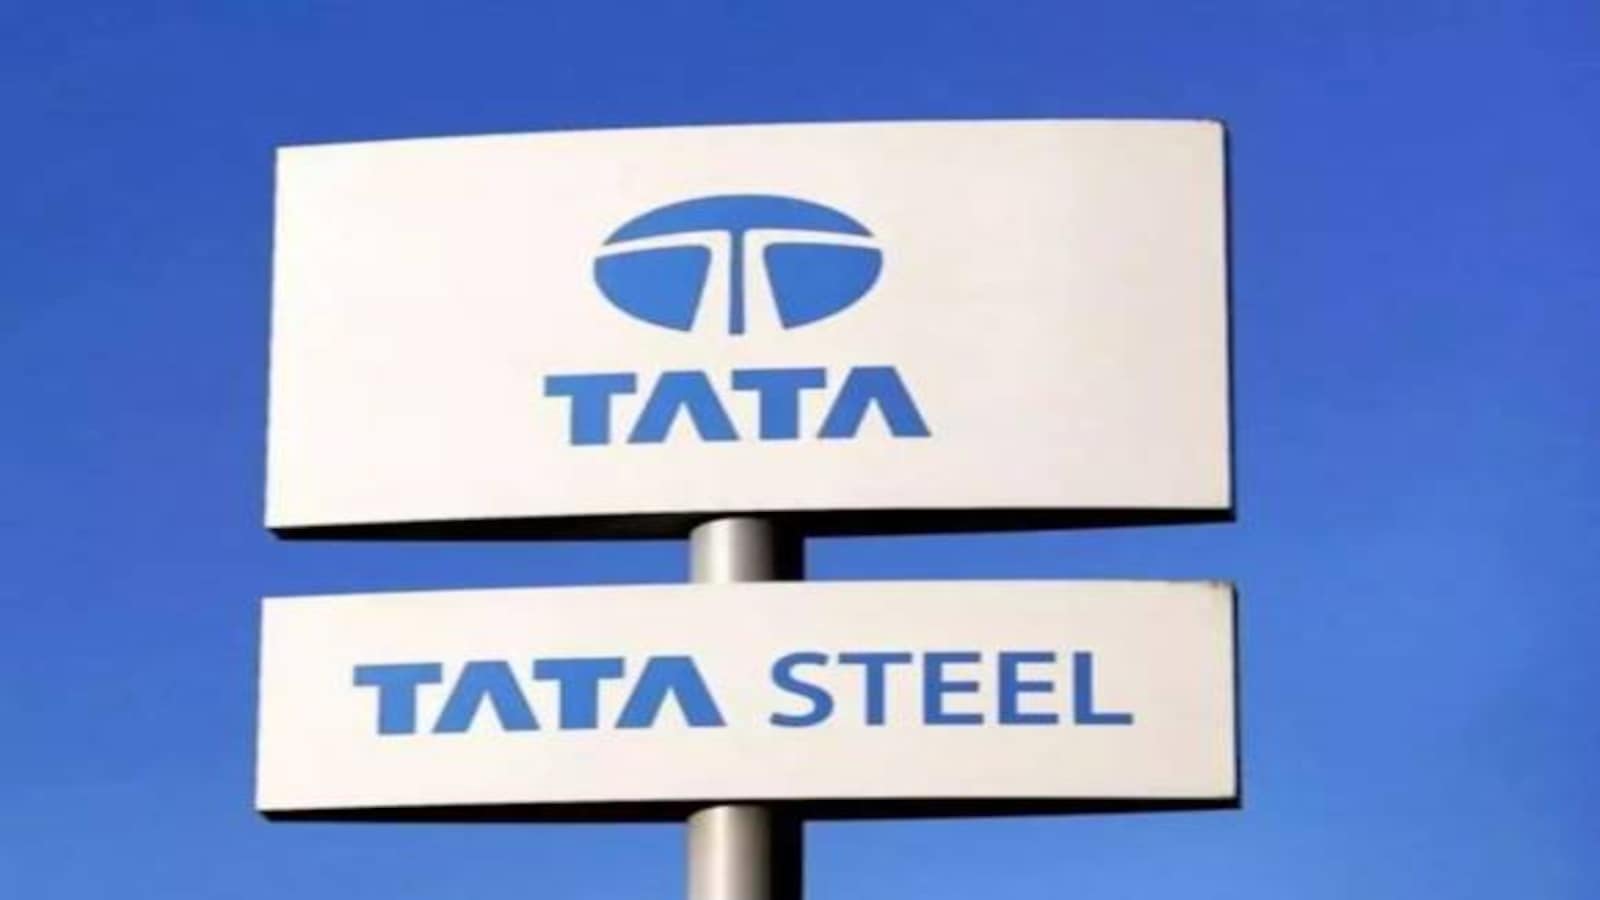 tata steel q1 update: Tata Steel Q1 Update: Crude steel output up